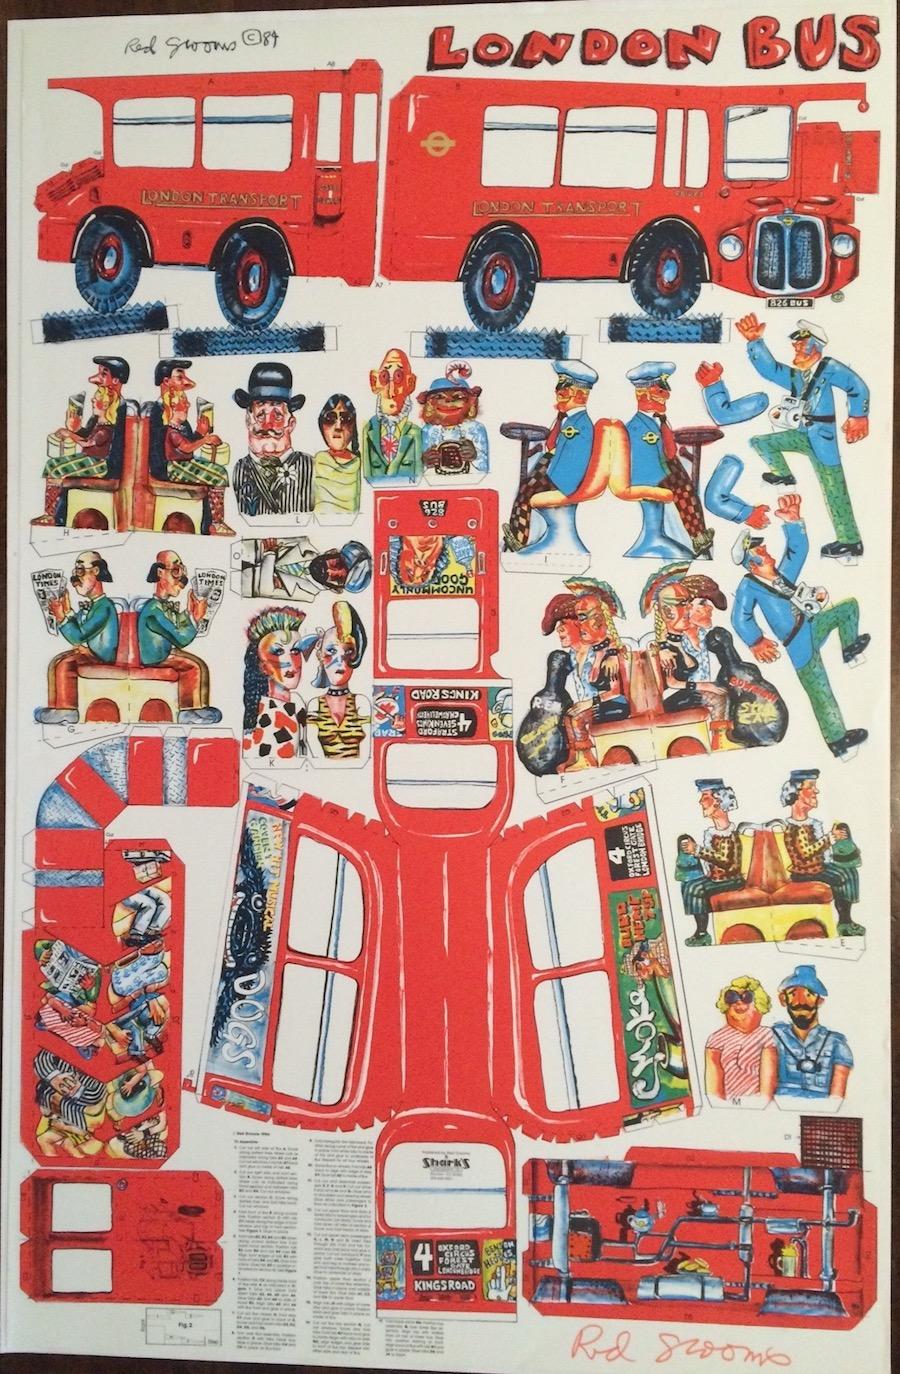 London Bus - Print by Red Grooms